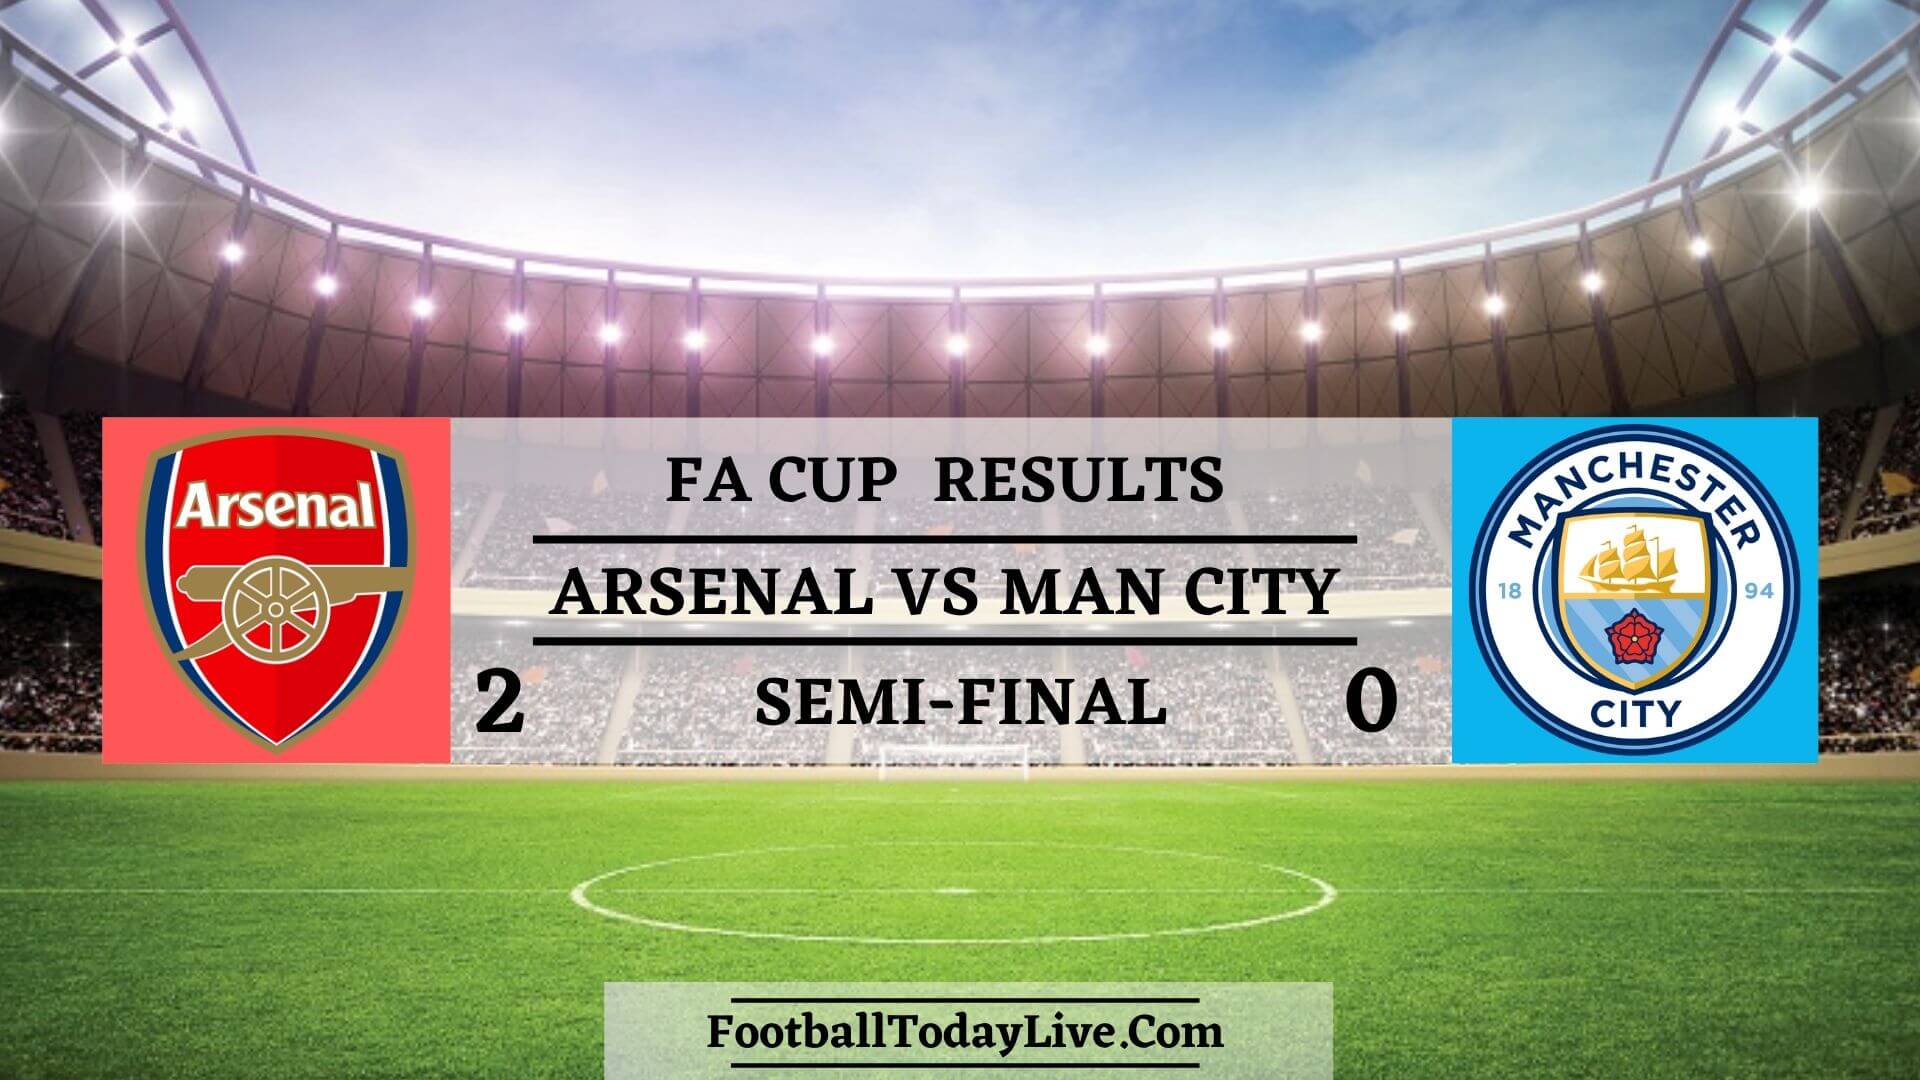 Arsenal Vs Manchester City | FA Cup Semi-Final Result 2020